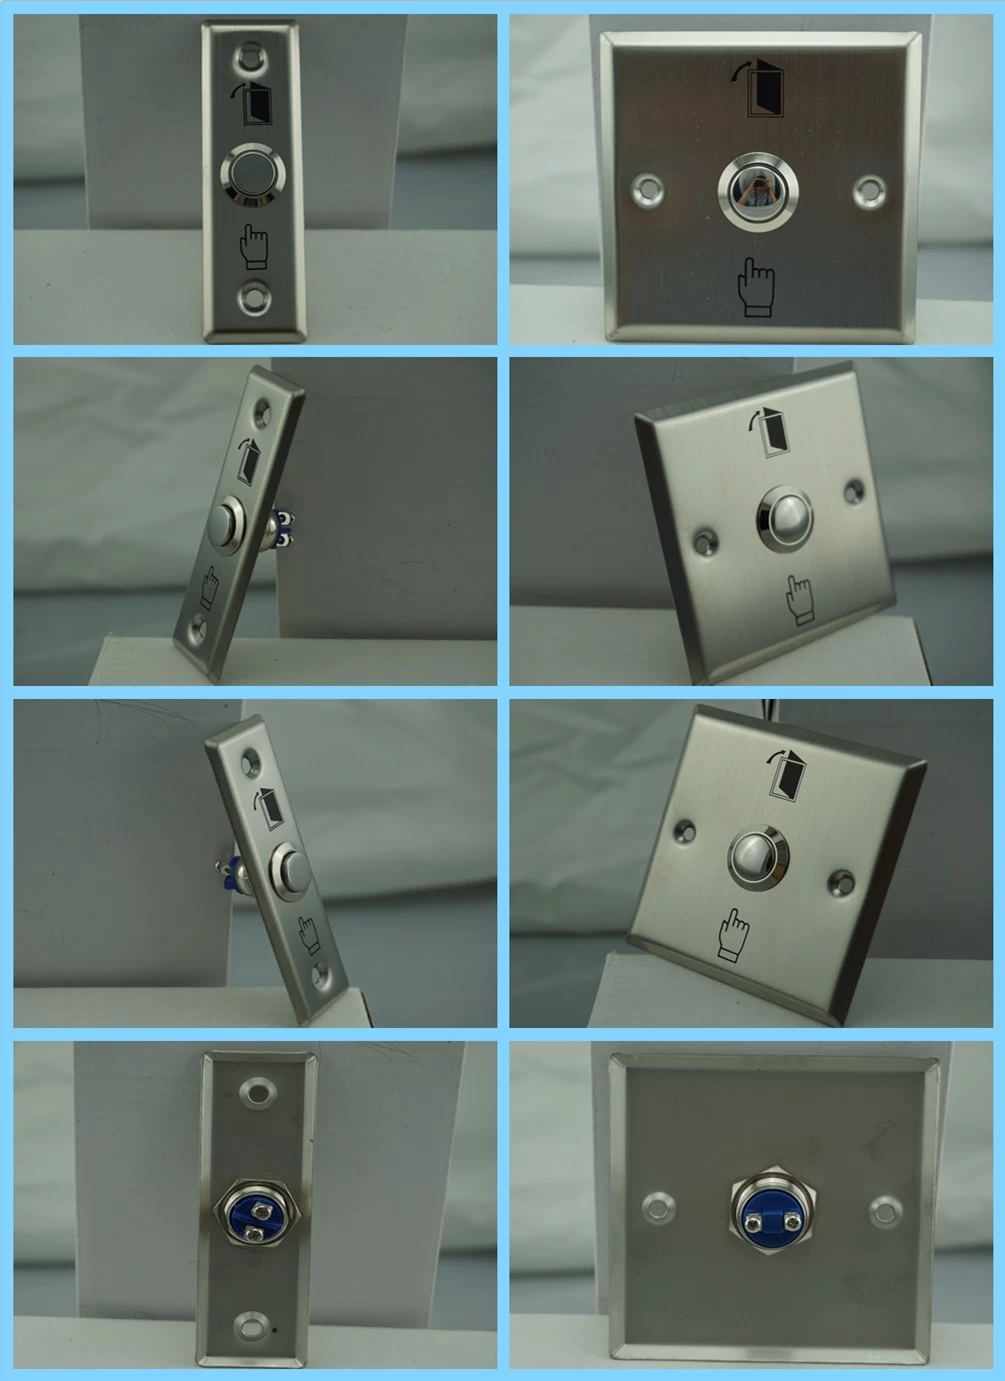 Stainless steel panel door release/push button